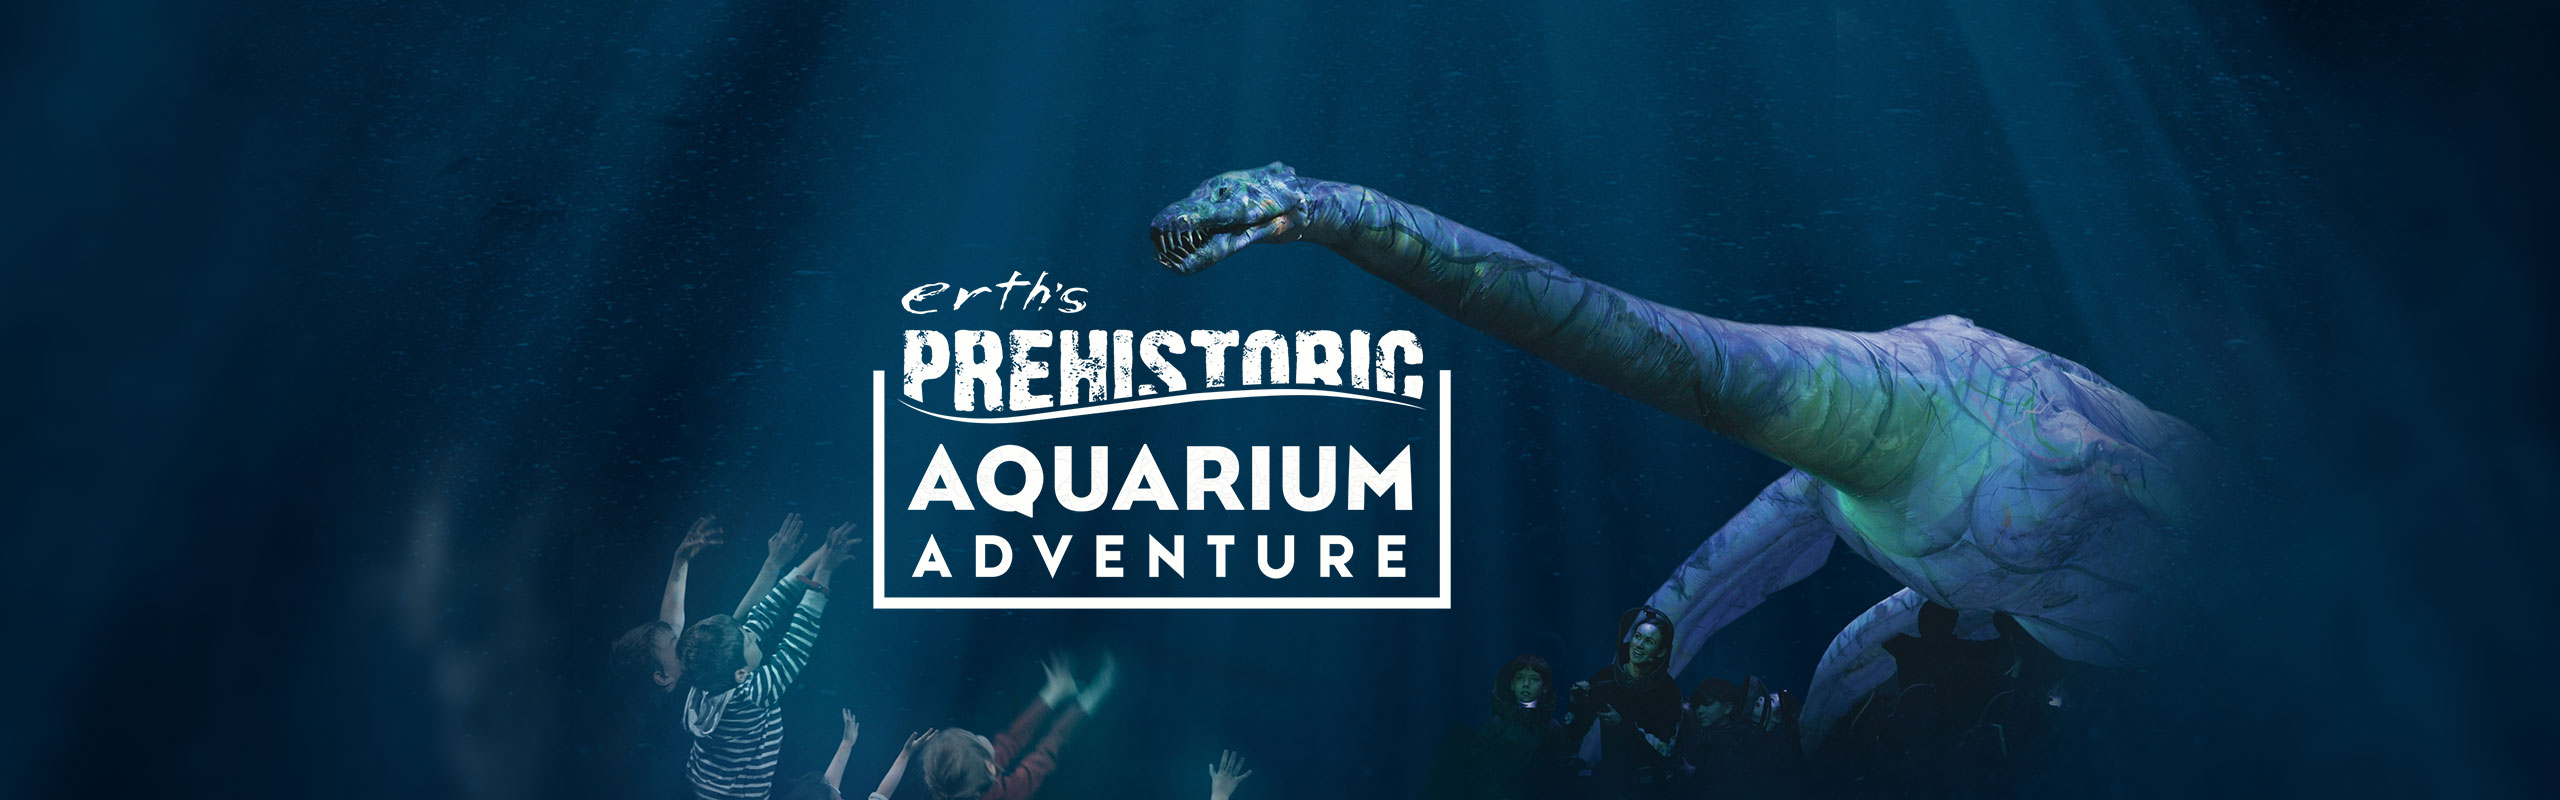 Picture of Erth's Prehistoric Aquarium - Performing Arts and Leadership